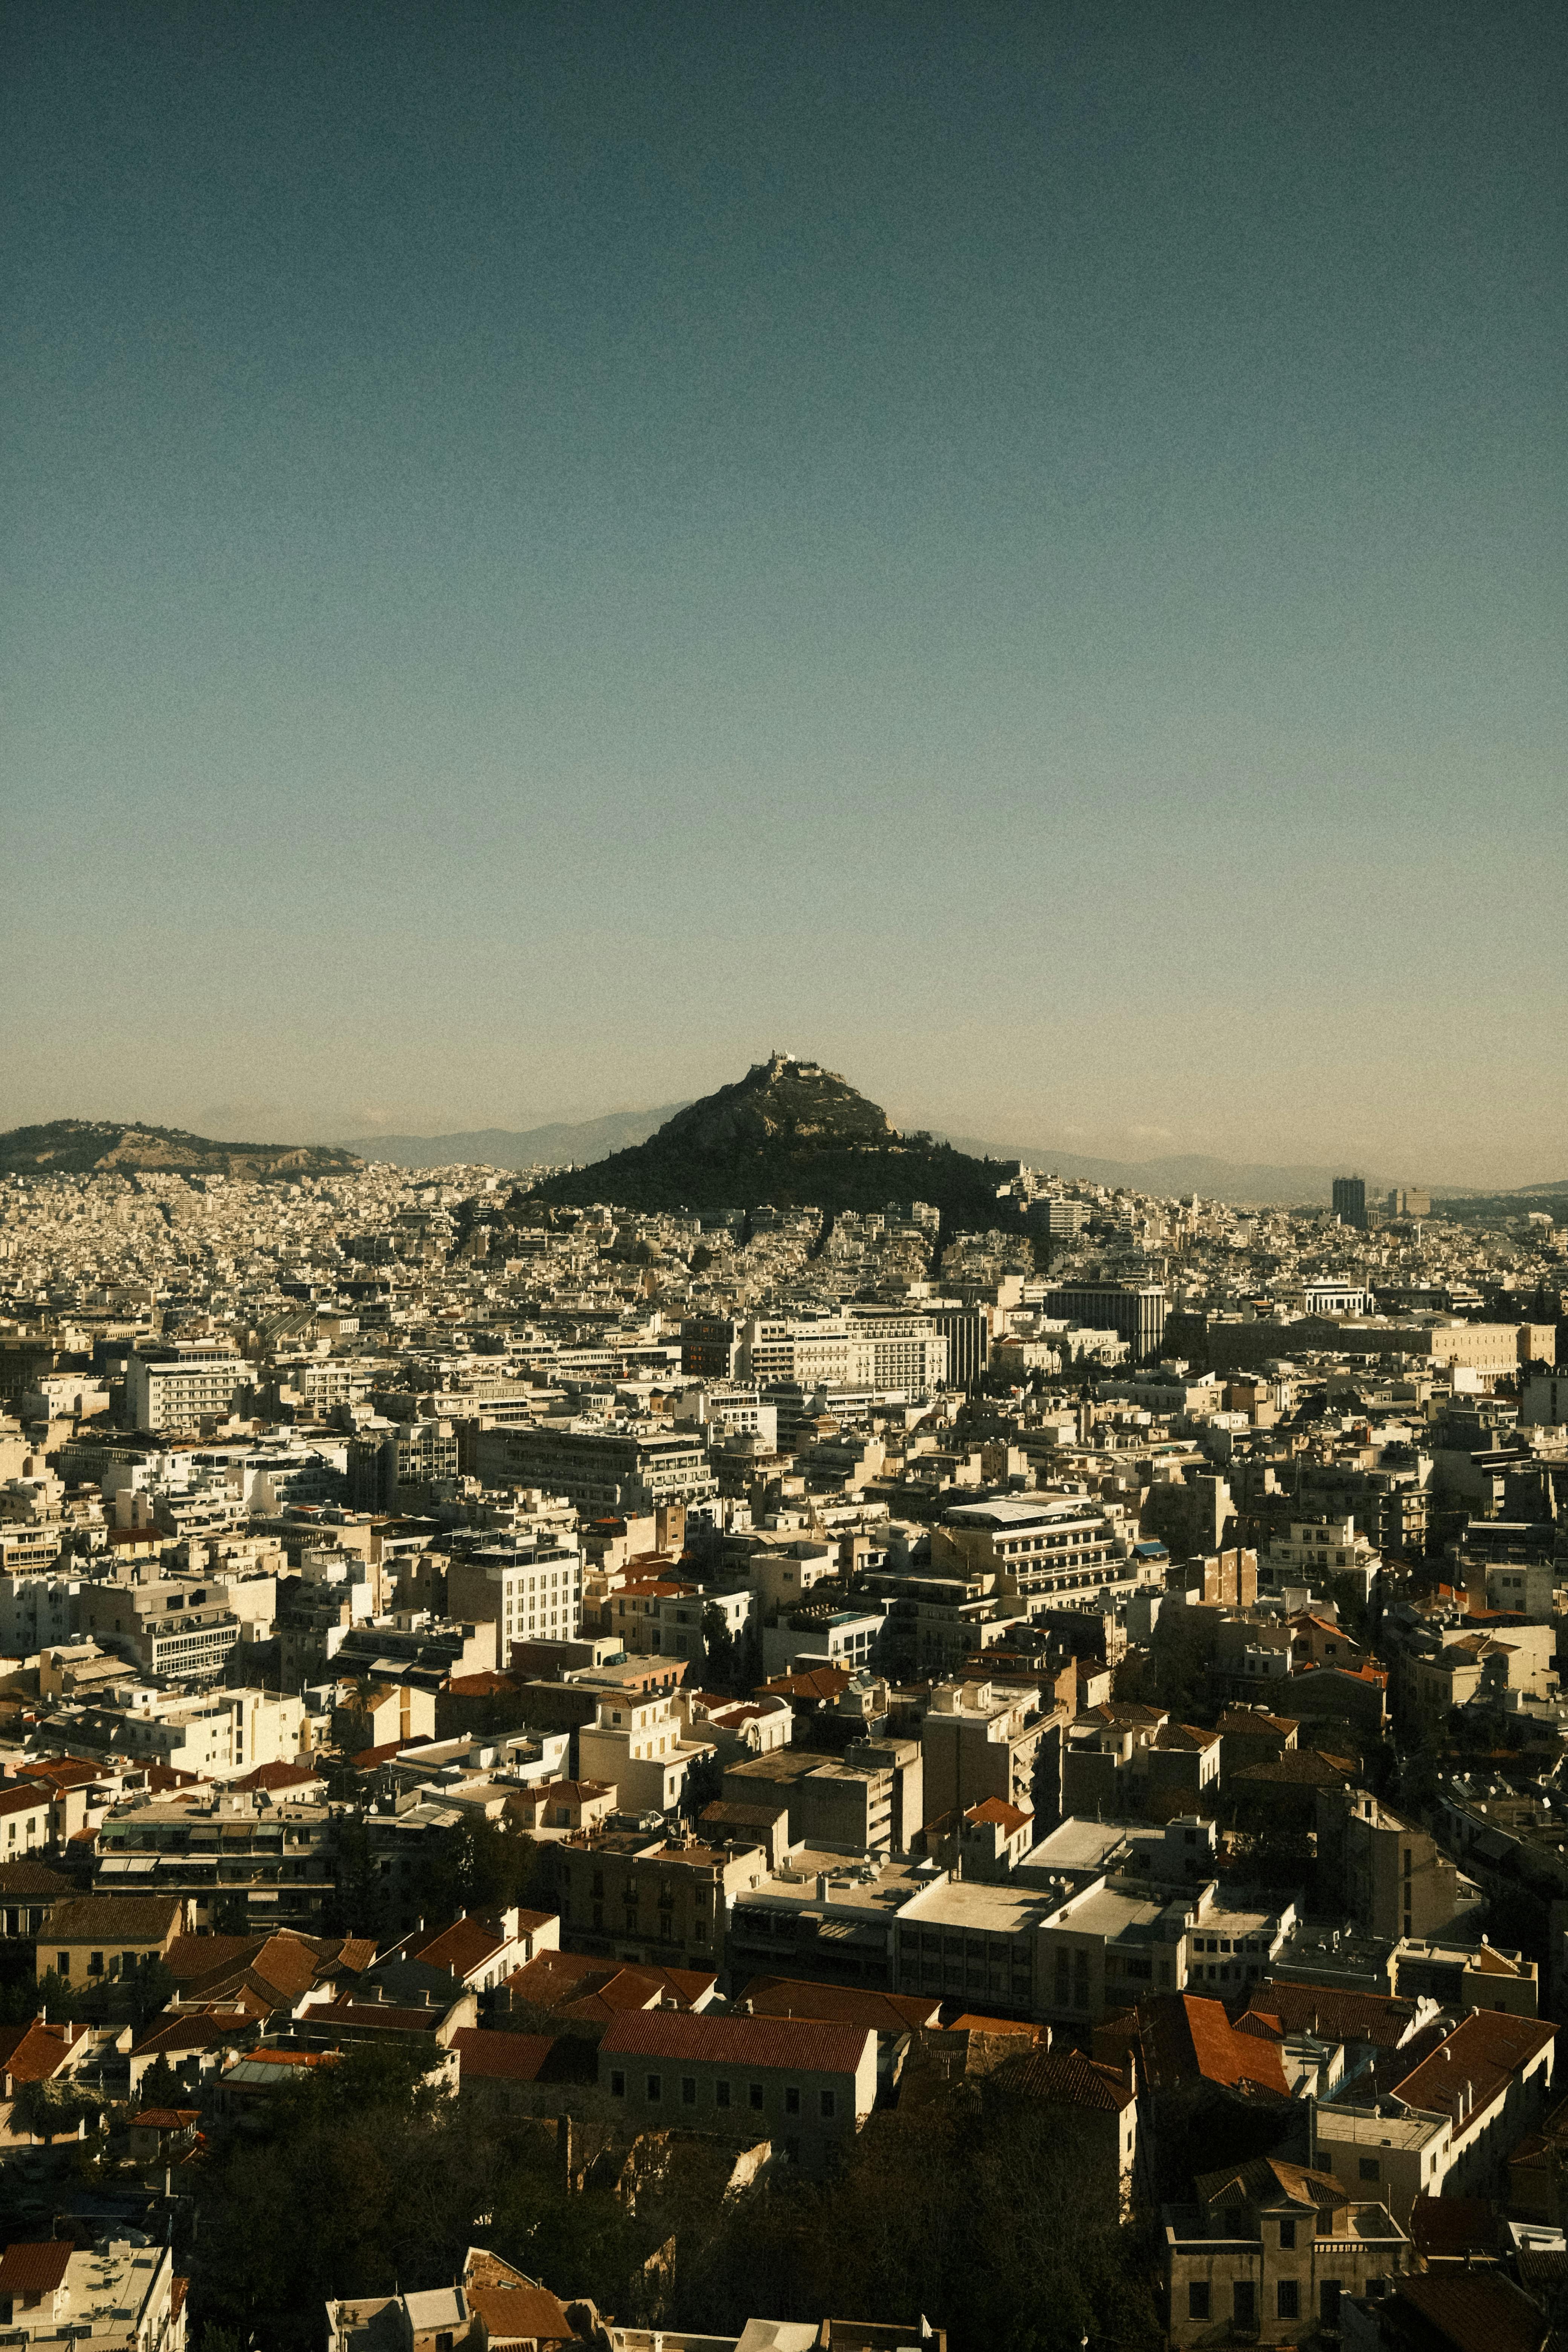 Gratis Fotos de stock gratuitas de acrópolis, Atenas, fotografía aérea Foto de stock